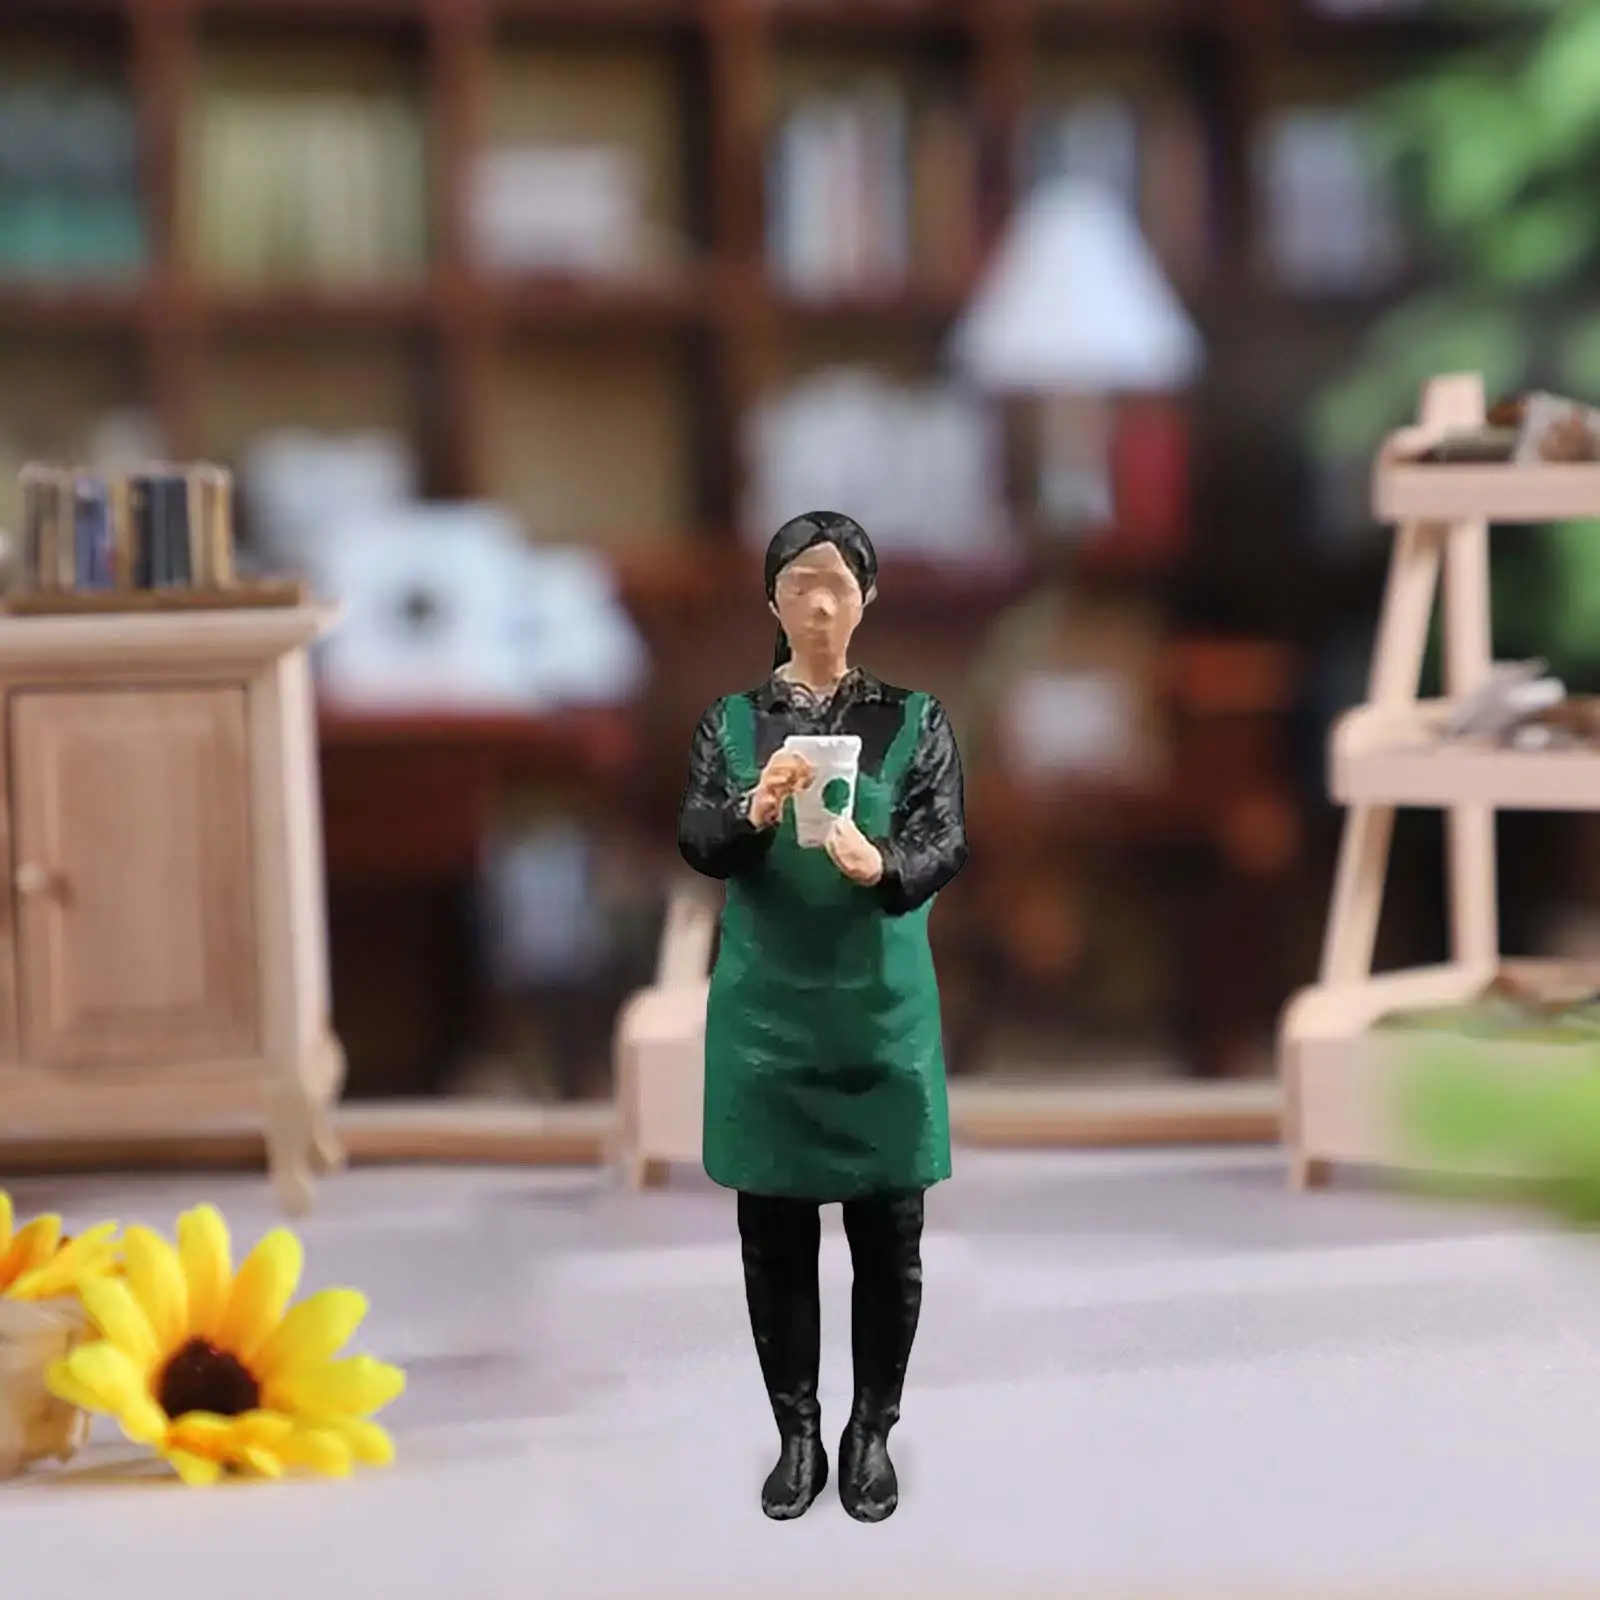 1:64 Coffee Salesperson Figure Train Railway Miniature Fairy Garden DIY Projects Scene Collections S Scale Street Ornaments